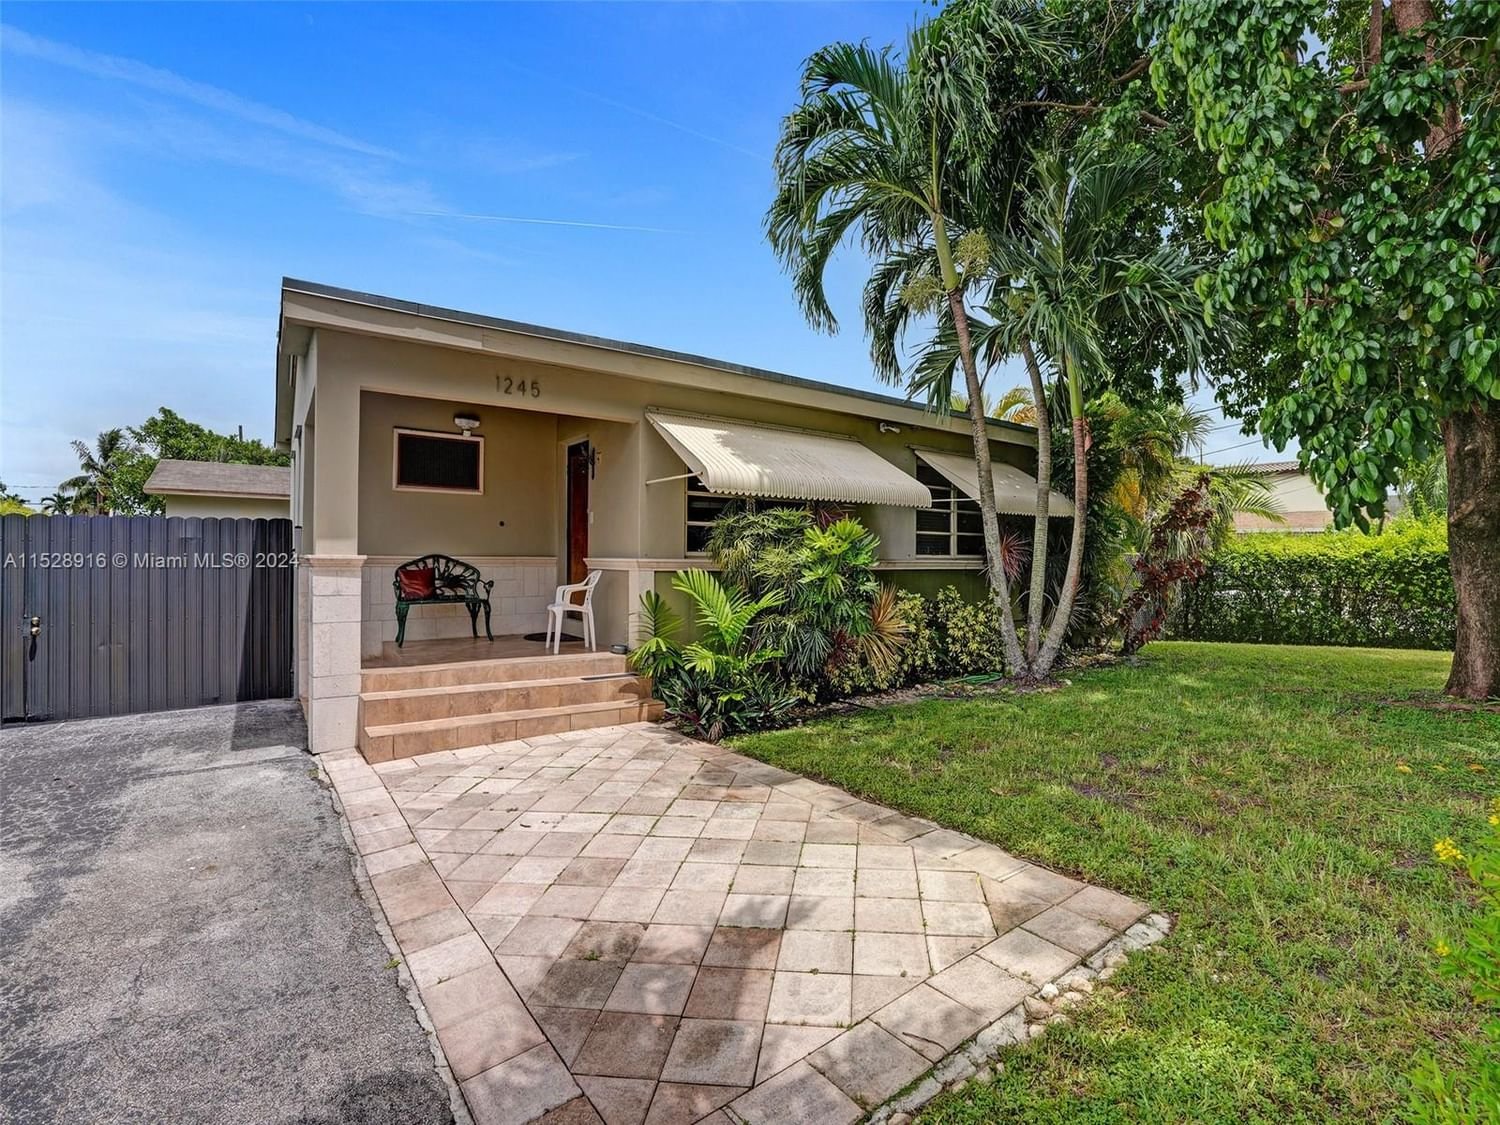 Real estate property located at 1245 90th Ave, Miami-Dade County, MIAMI WESTGATE TRACT, Miami, FL